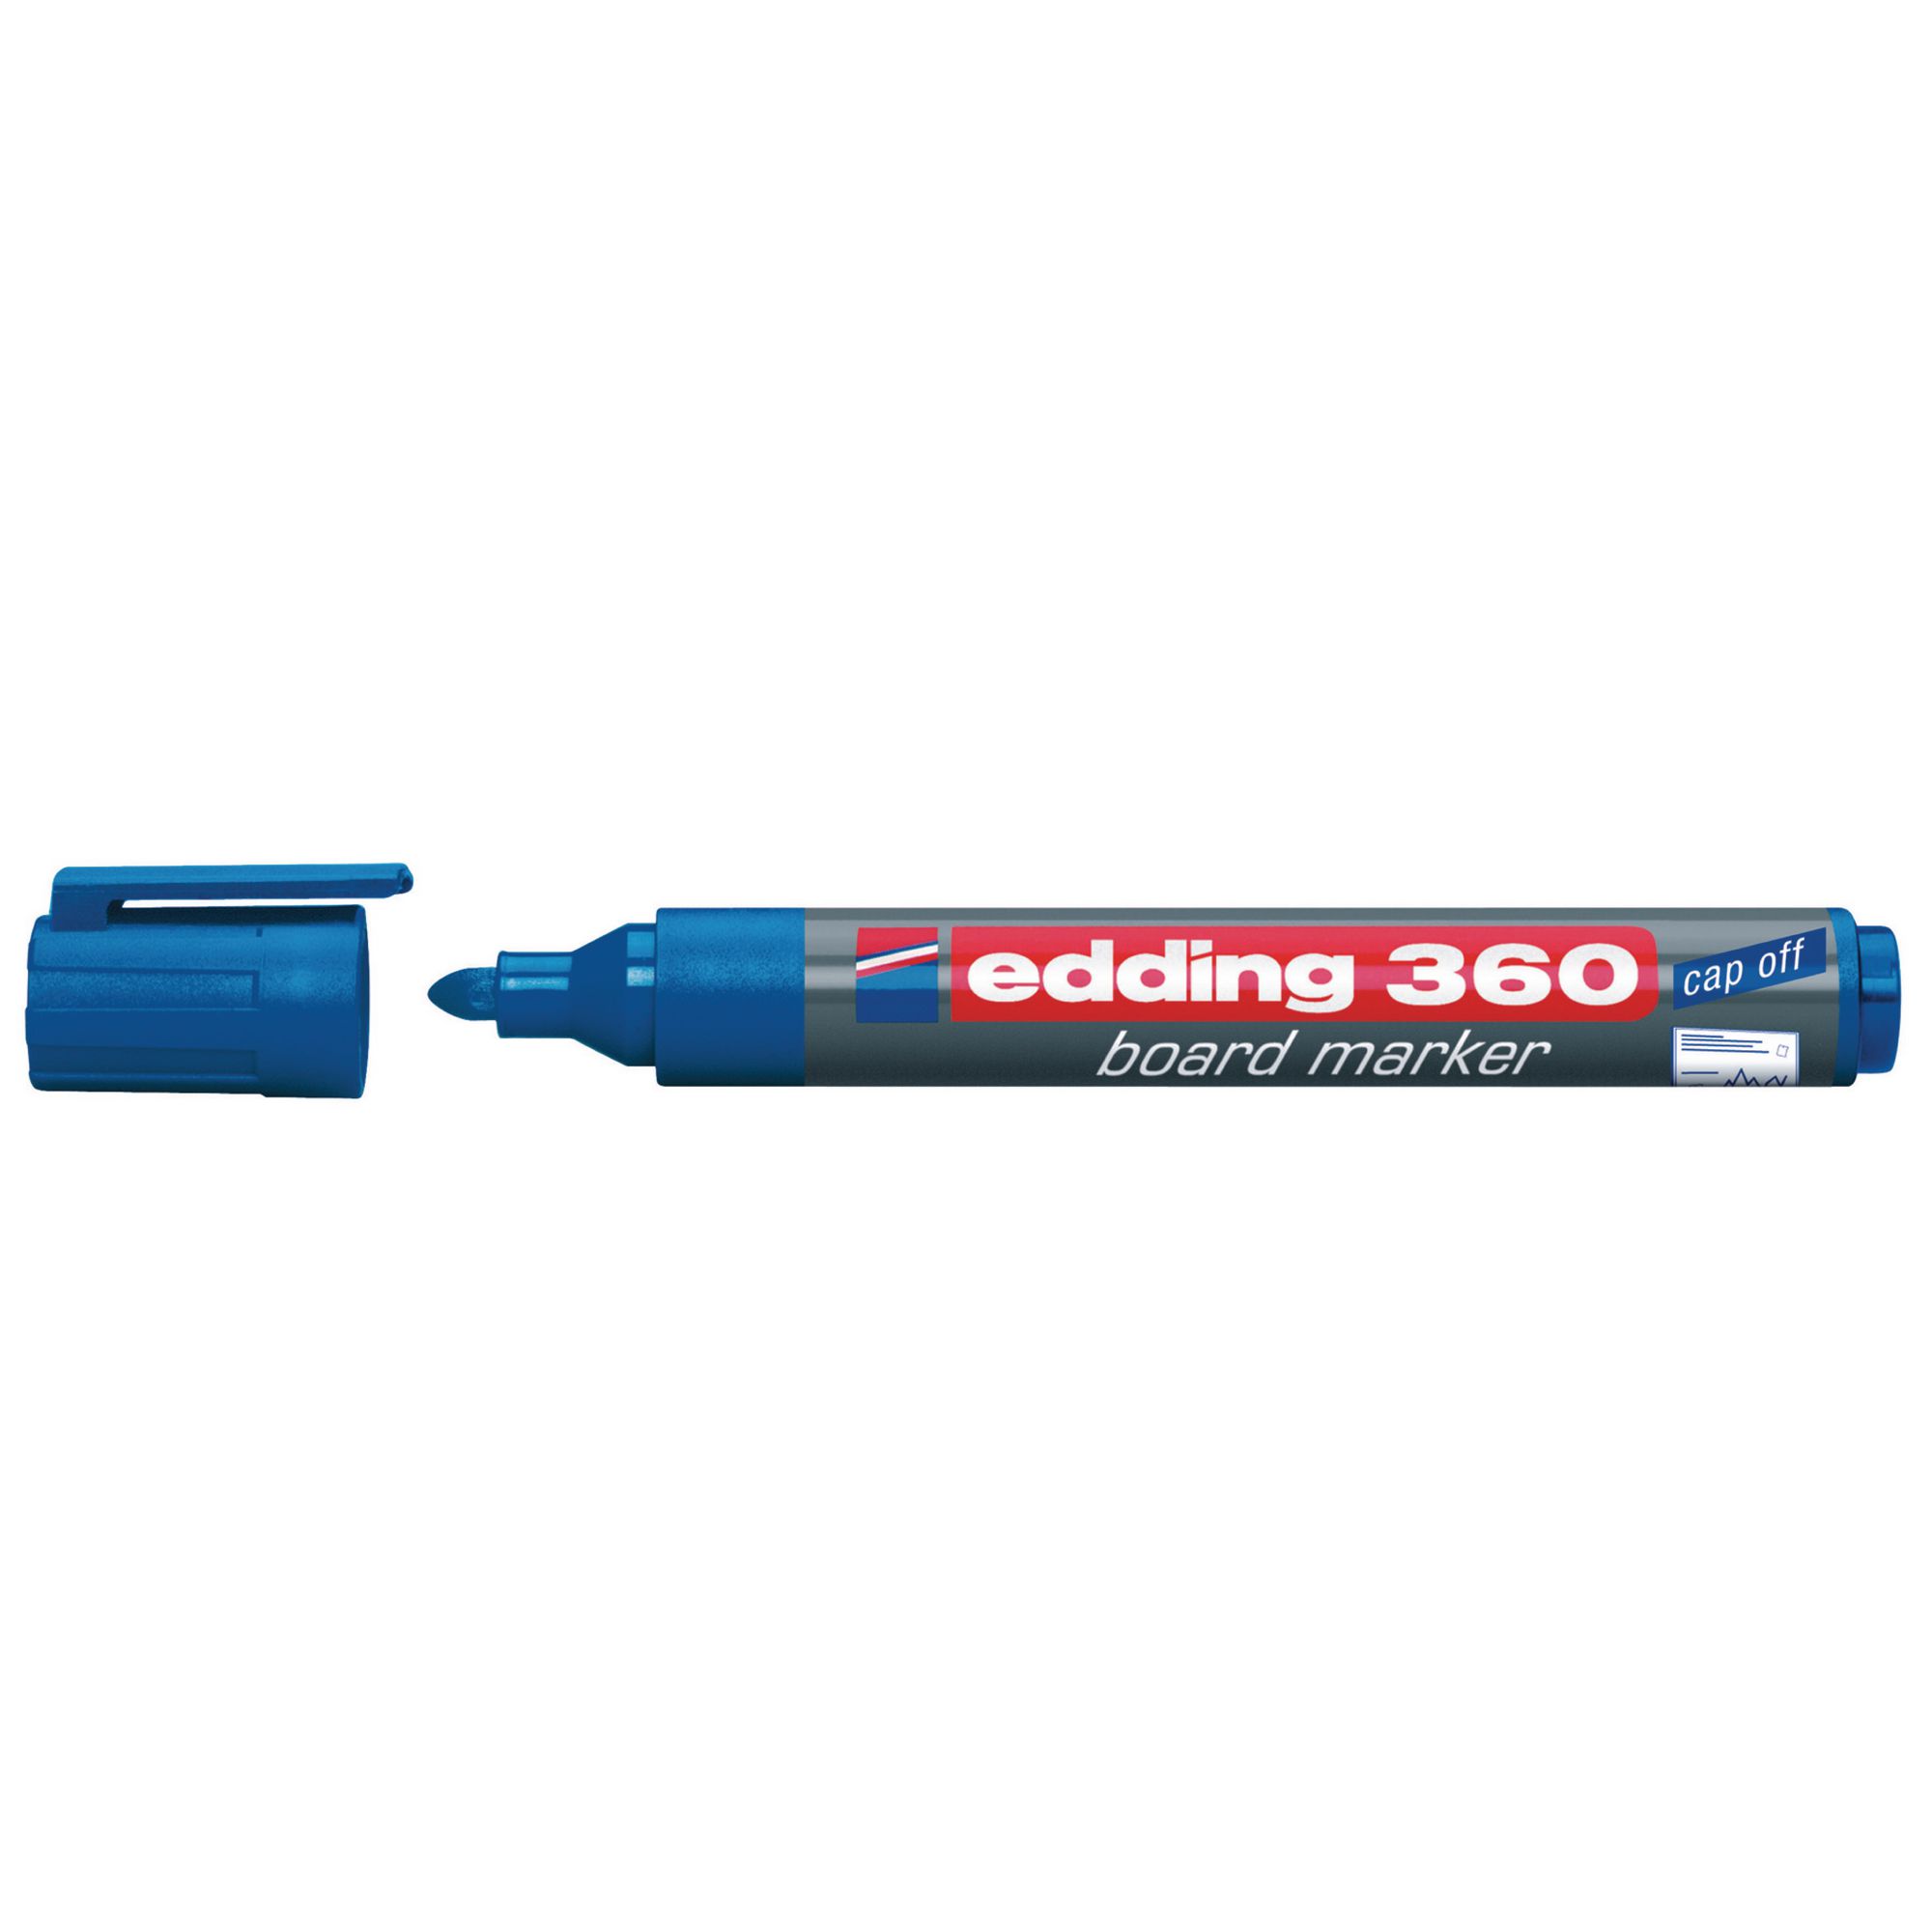 Edding 360 Boardmarker Bluex10